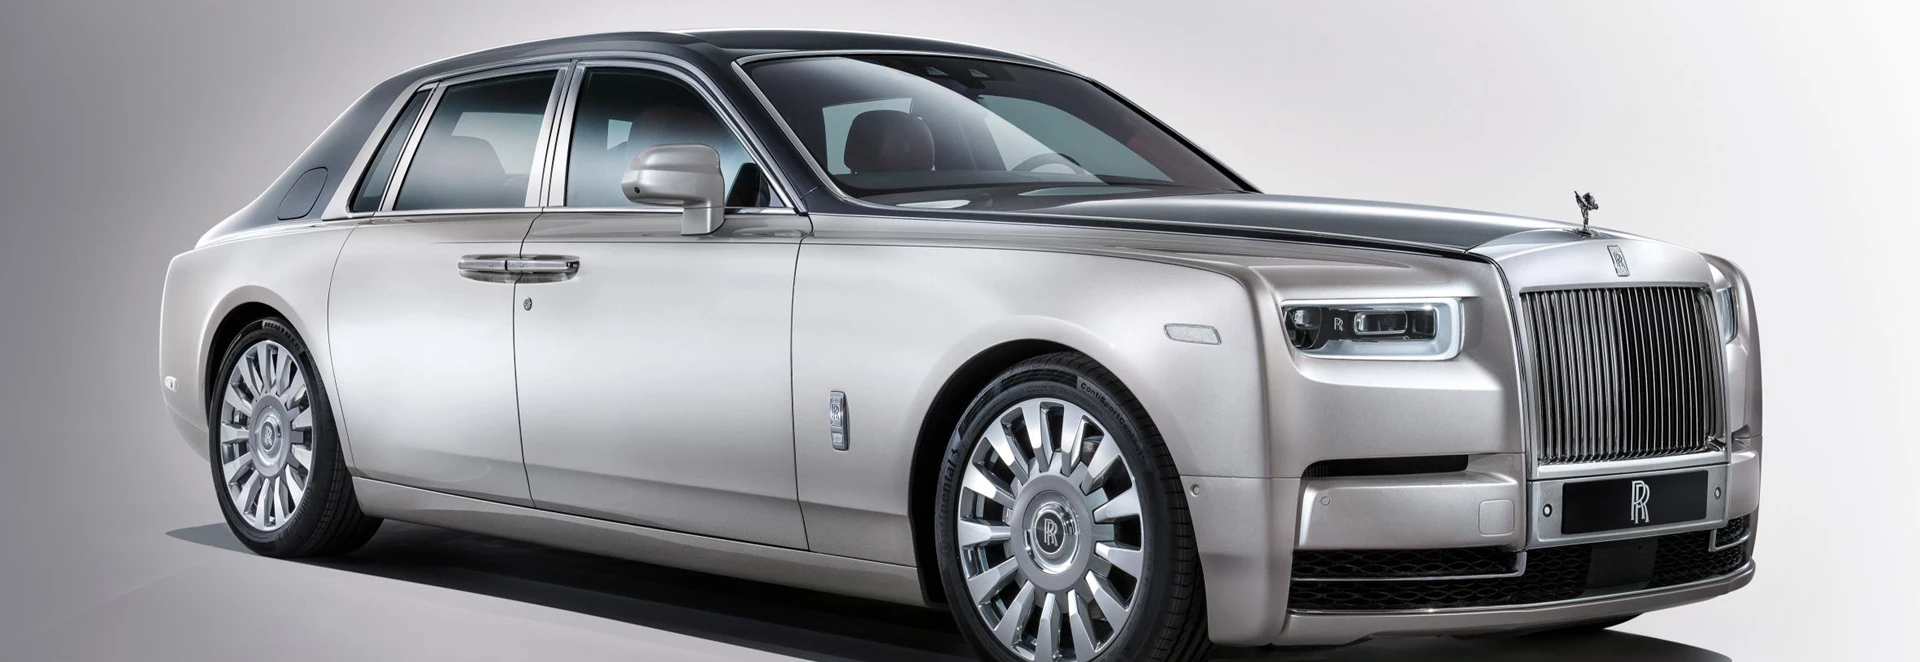 New Rolls-Royce Phantom unmasked 